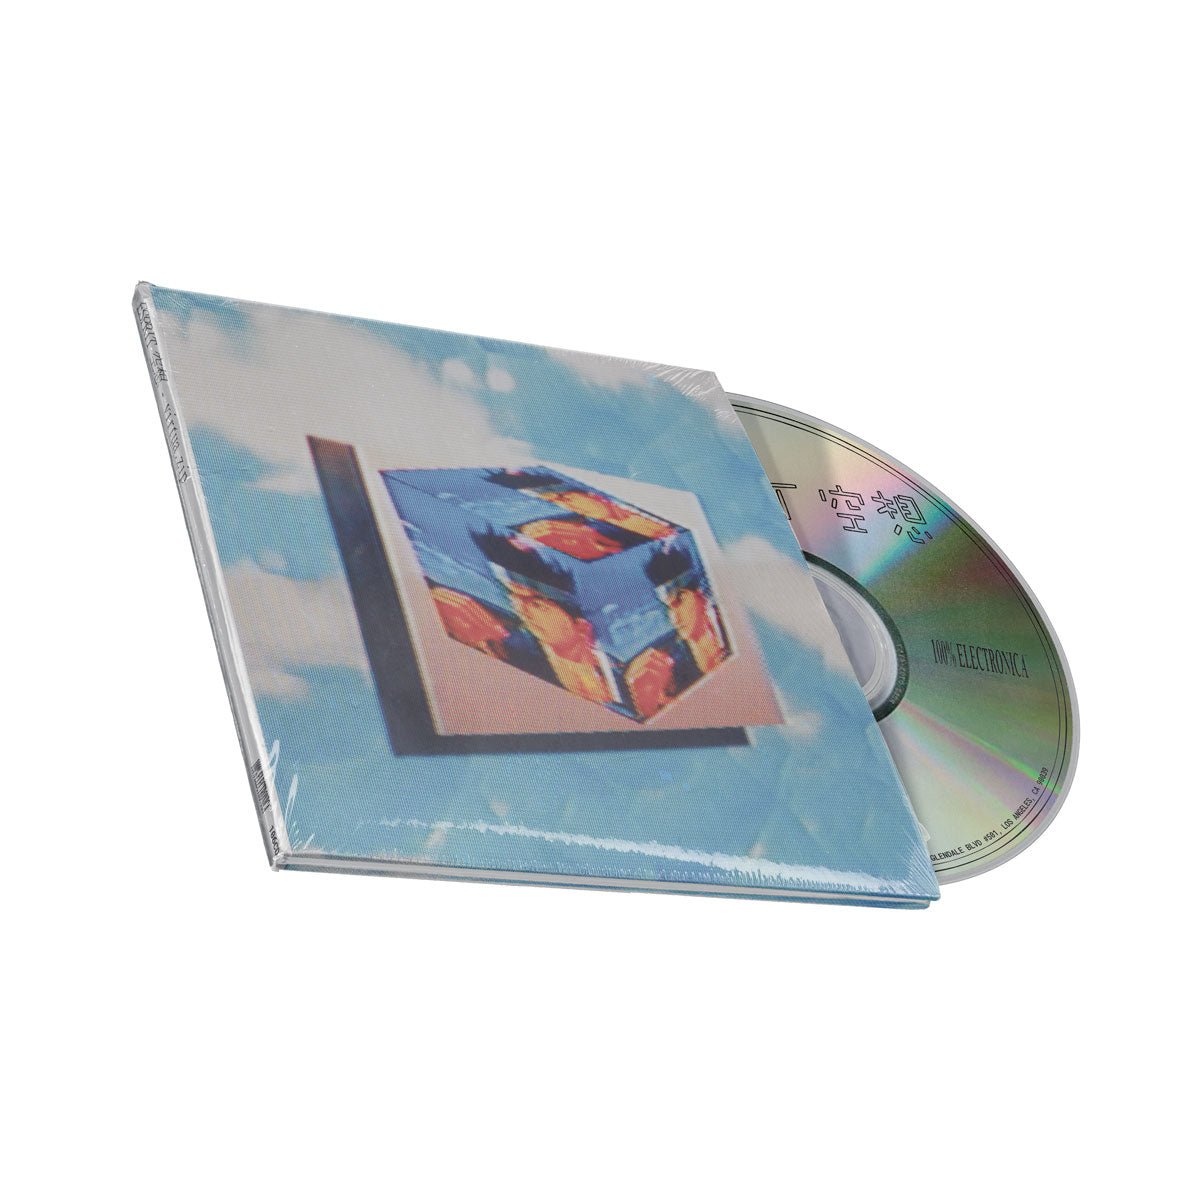 ESPRIT 空想 - virtua.zip CD - 100% Electronica Official Store (Photo 1)